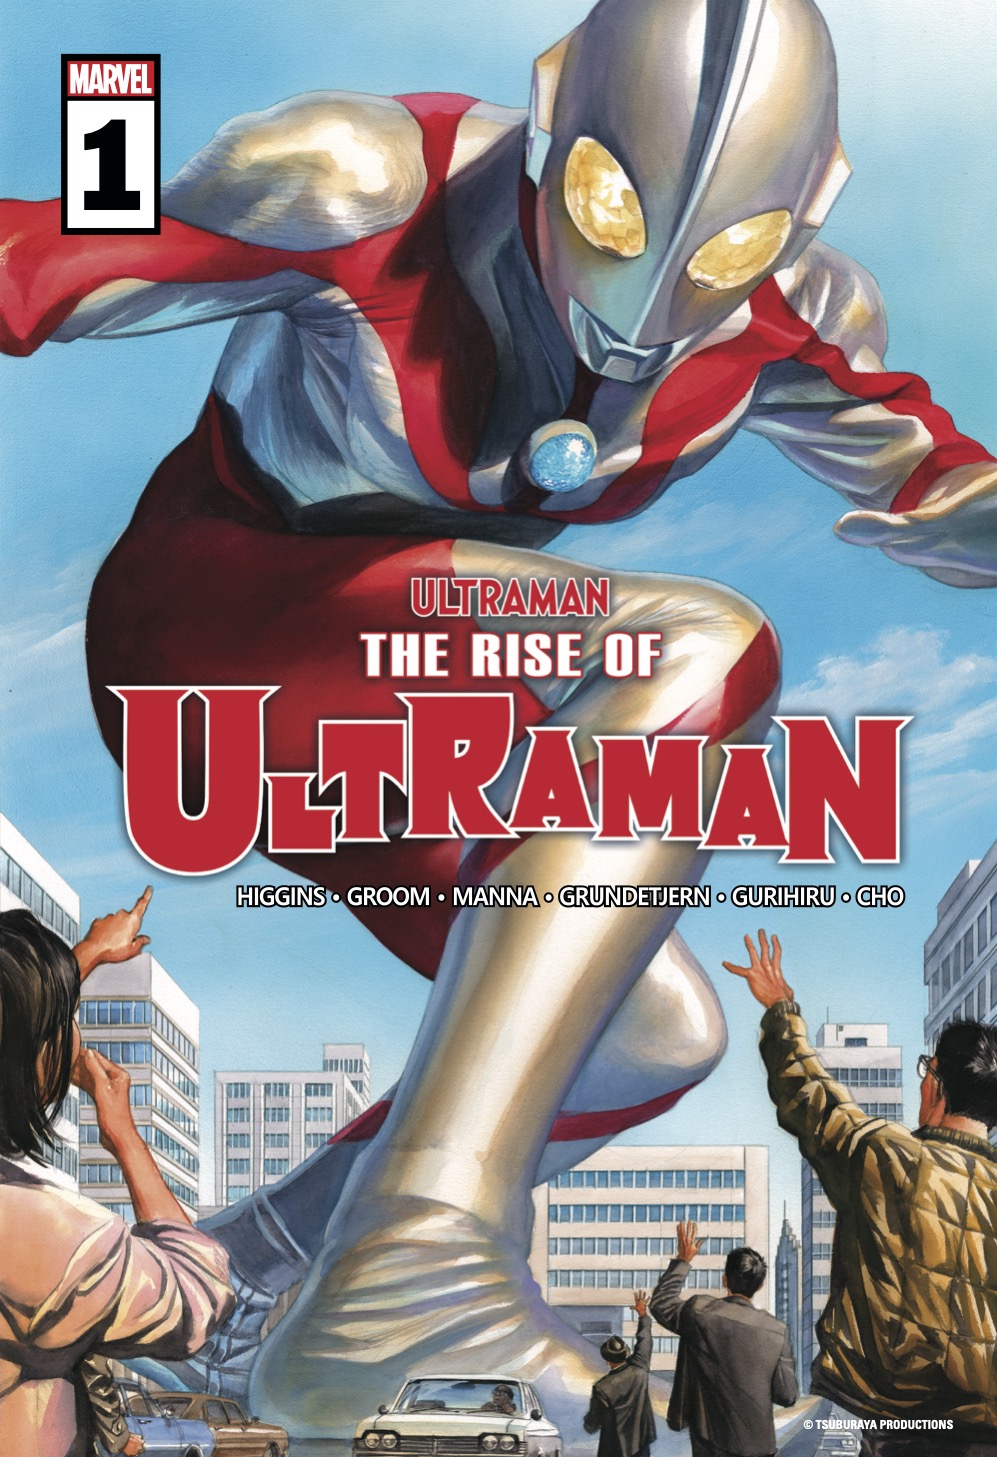 Marvelコミックス版ウルトラマン The Rise Of Ultraman 日本語版がウルトラサブスク Tsuburaya Imagination で配信開始 ヴィレッジブックスから21年7月に単行本も発売決定 円谷ステーション